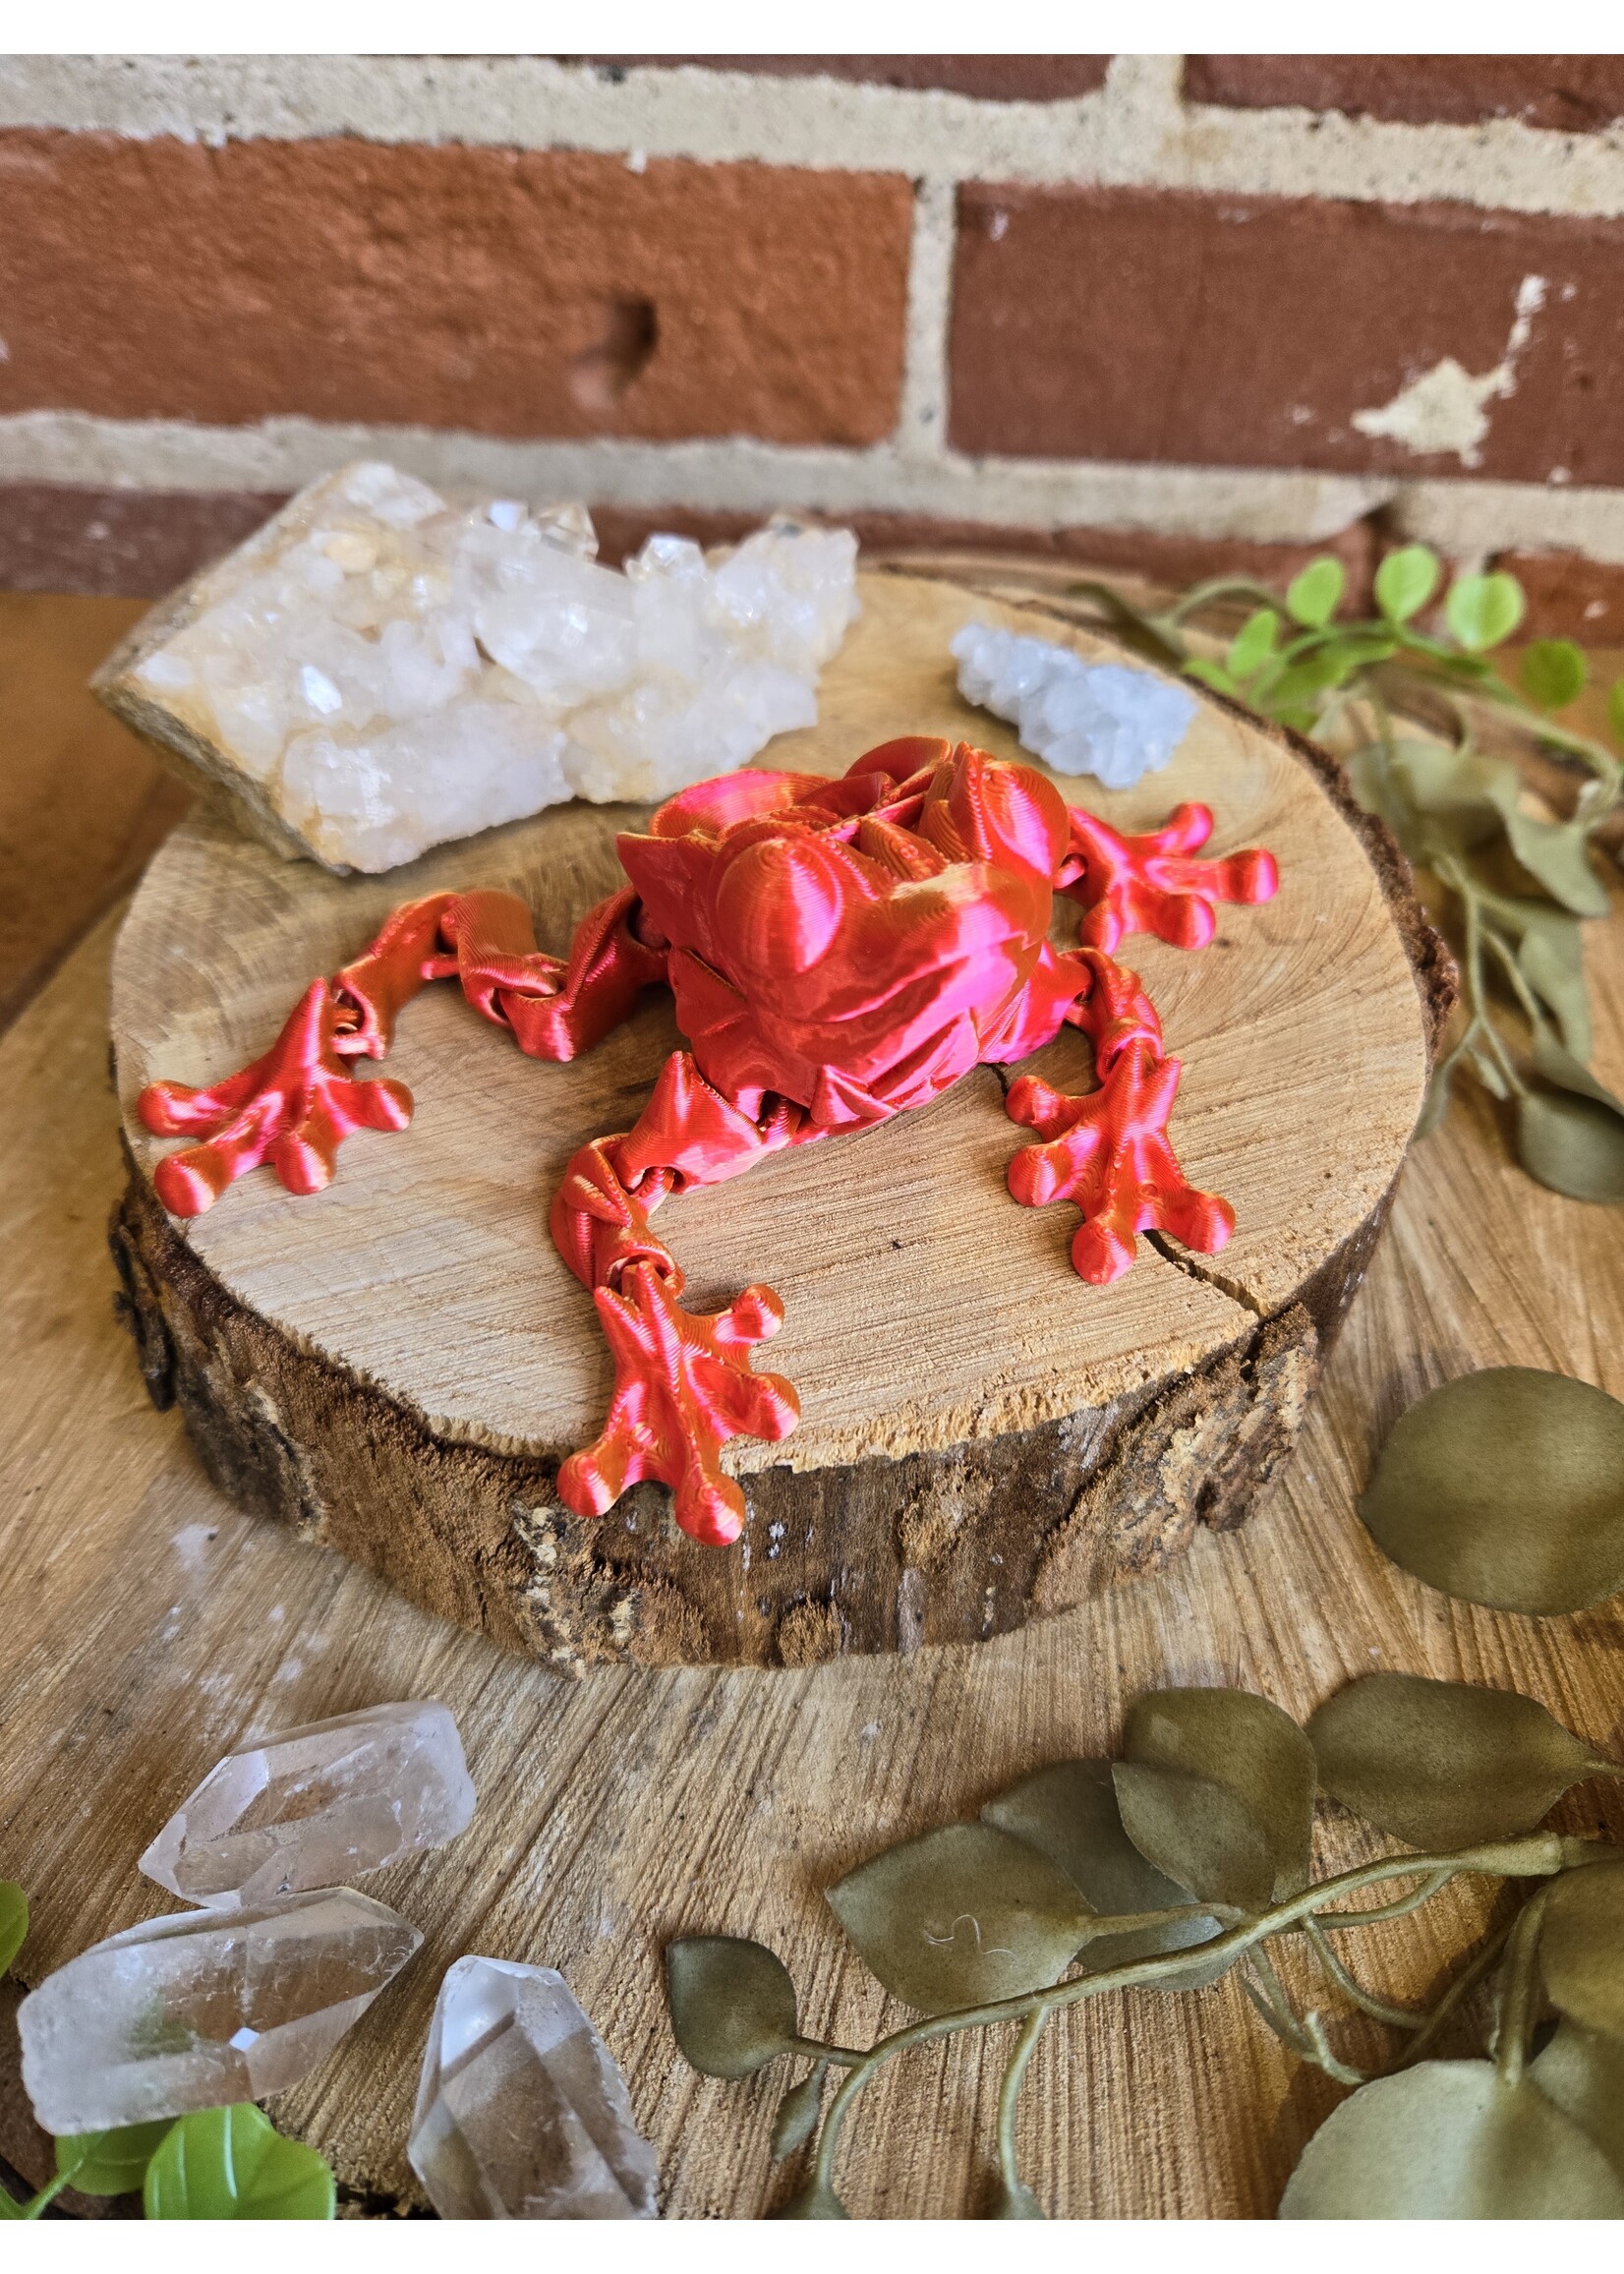 PrintsNSews 3D Printed Frogs